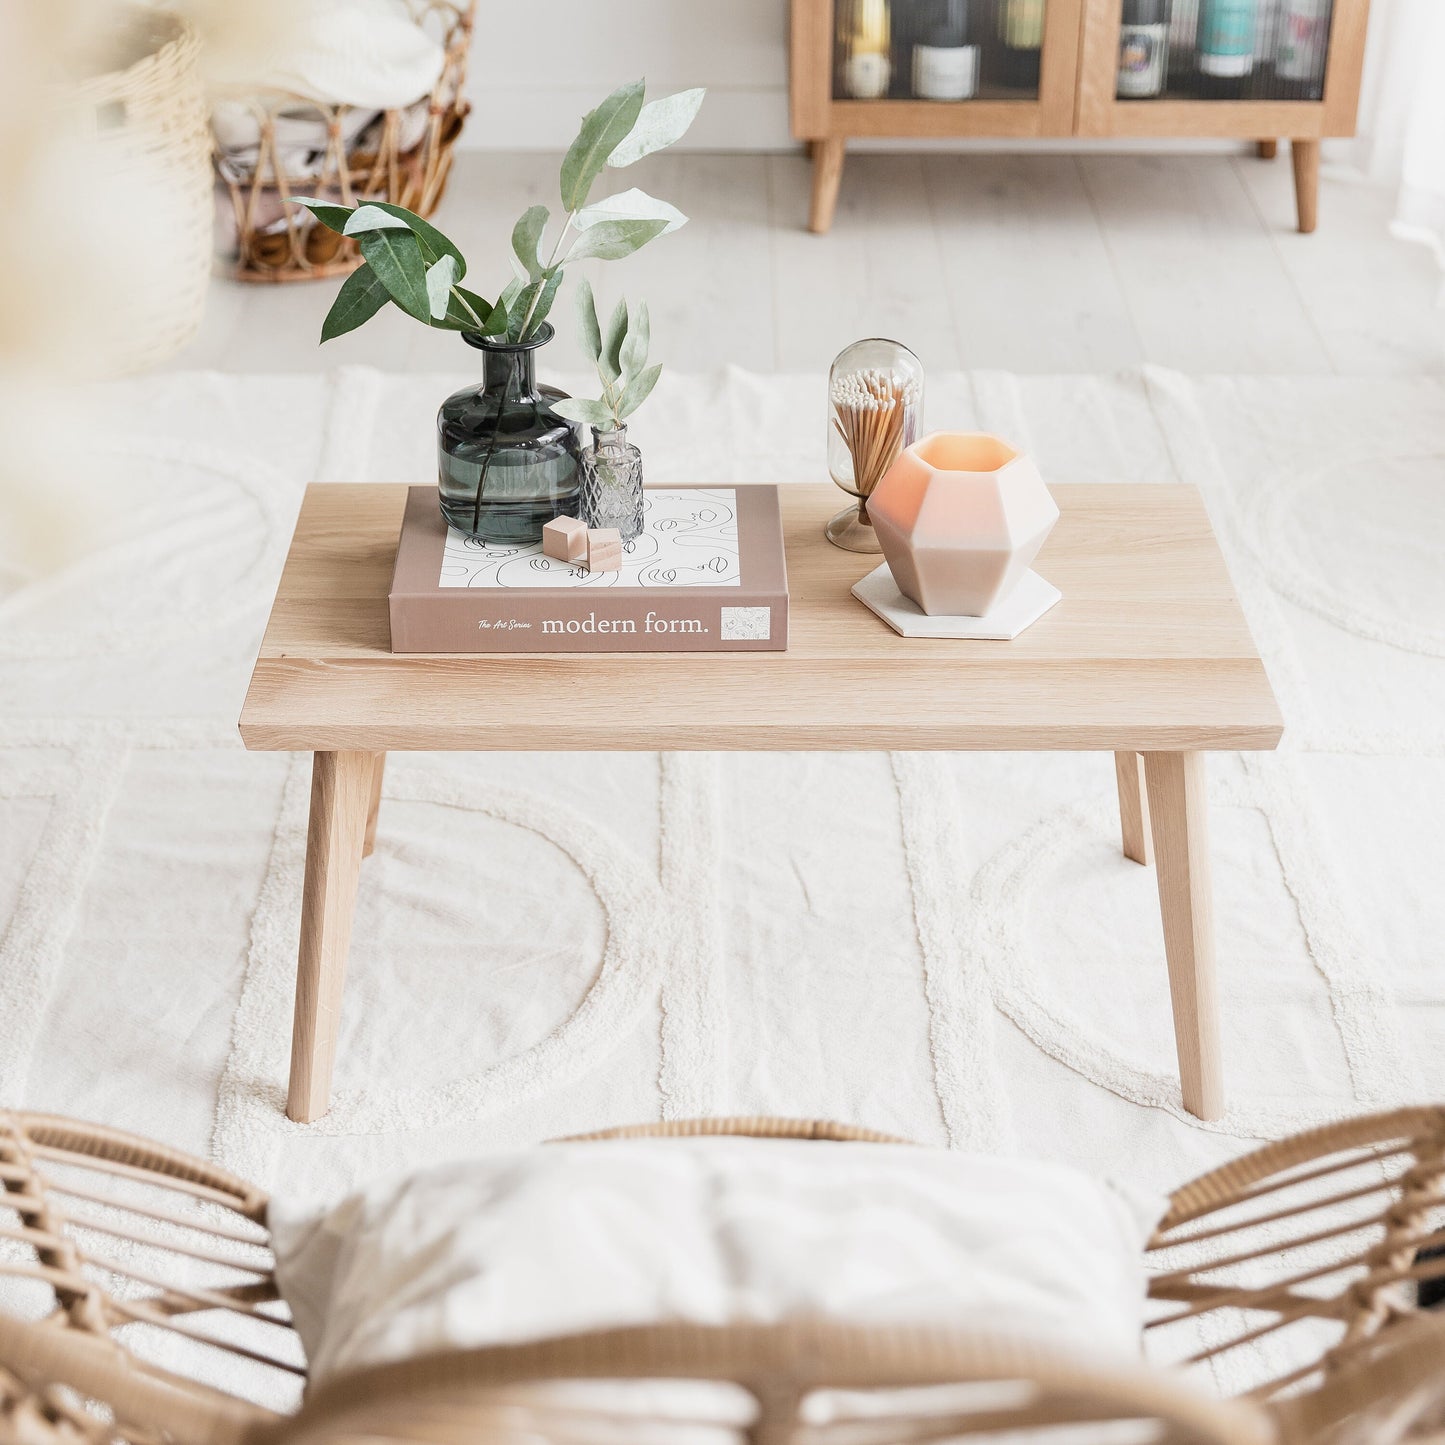 Scandi Oak Coffee Table. Low Solid Modern Hardwood Side Bench. Mid Century Bespoke Hand Made In The UK. Modern Nordic Scandinavian Furniture